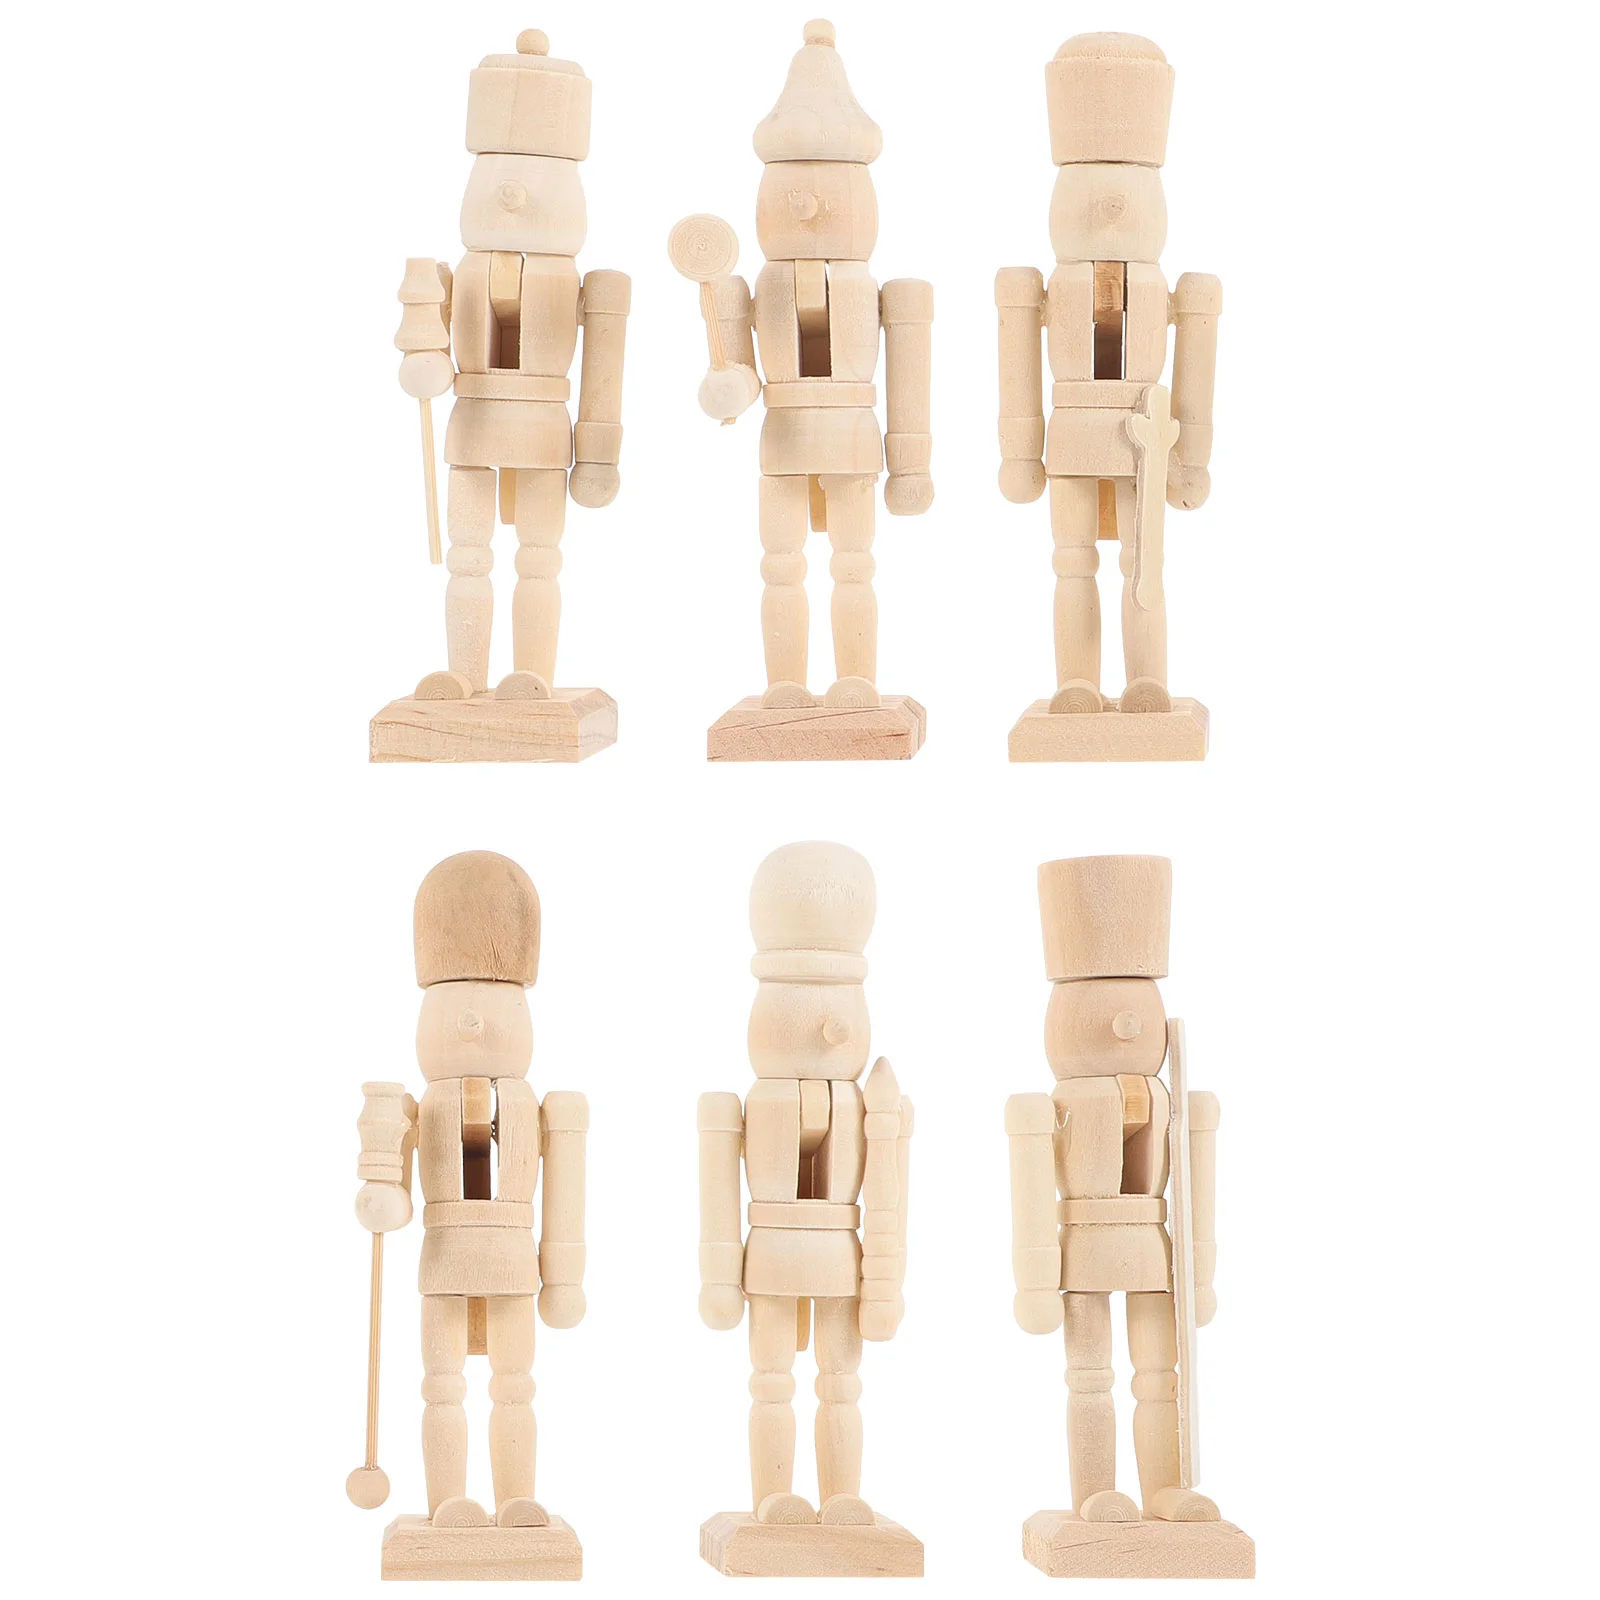 

6pcs Christmas Nutcracker Figurine Unfinished Wooden Peg People Desktop Figure Ornaments for Xmas Party DIY Painting Craft Peg